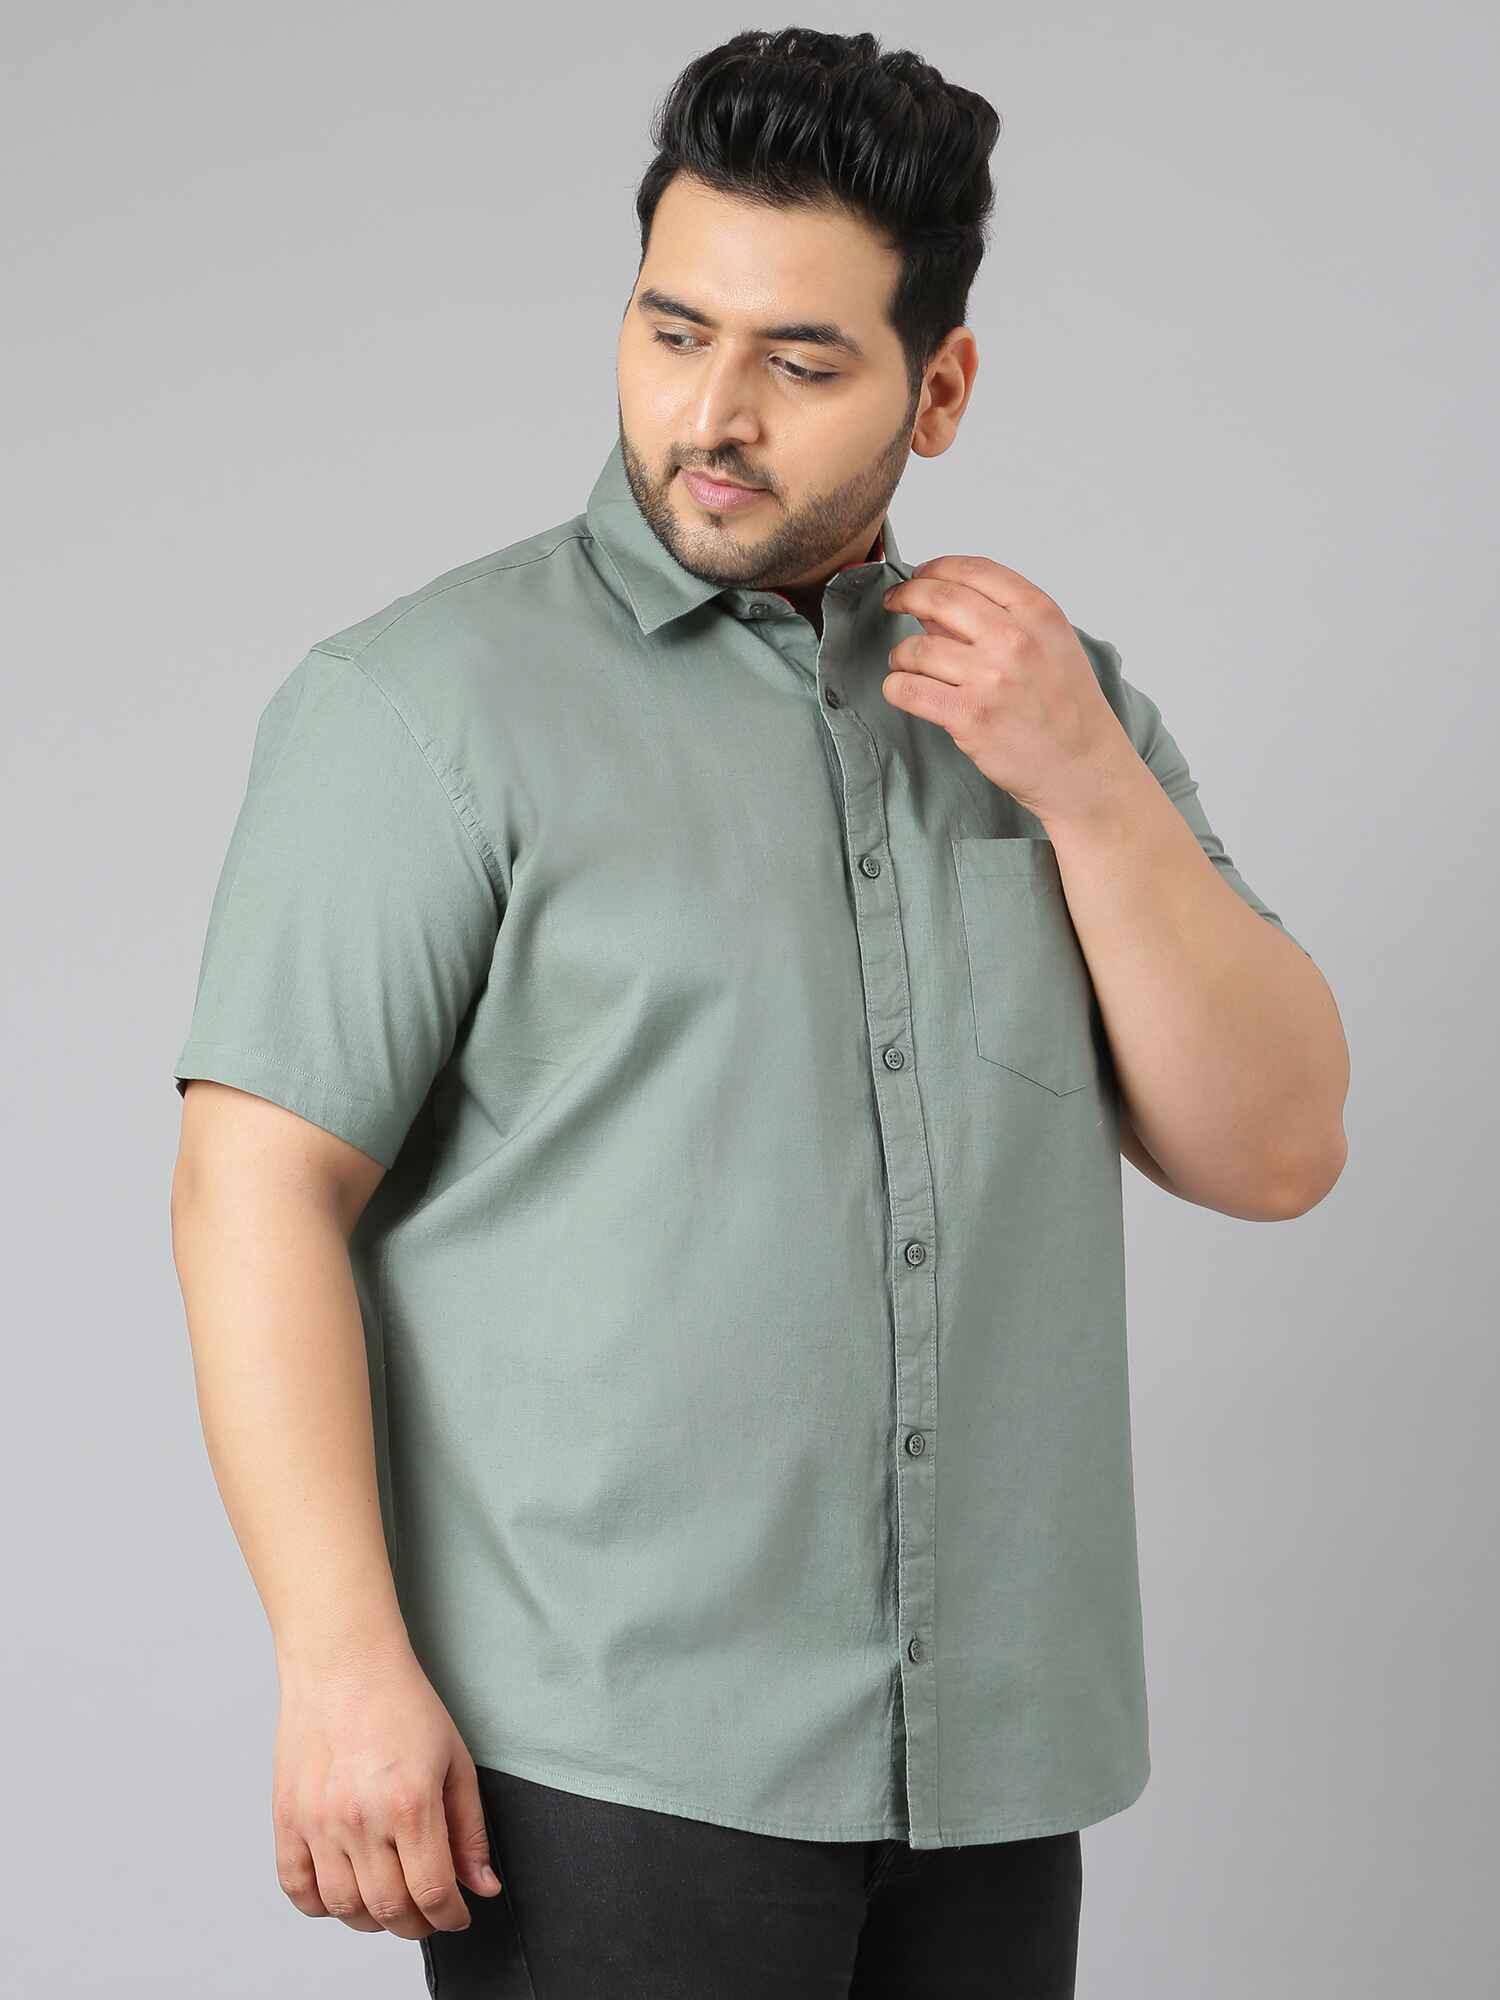 Hunter Green Solid Half Sleeve Shirt Men's Plus Size - Guniaa Fashions